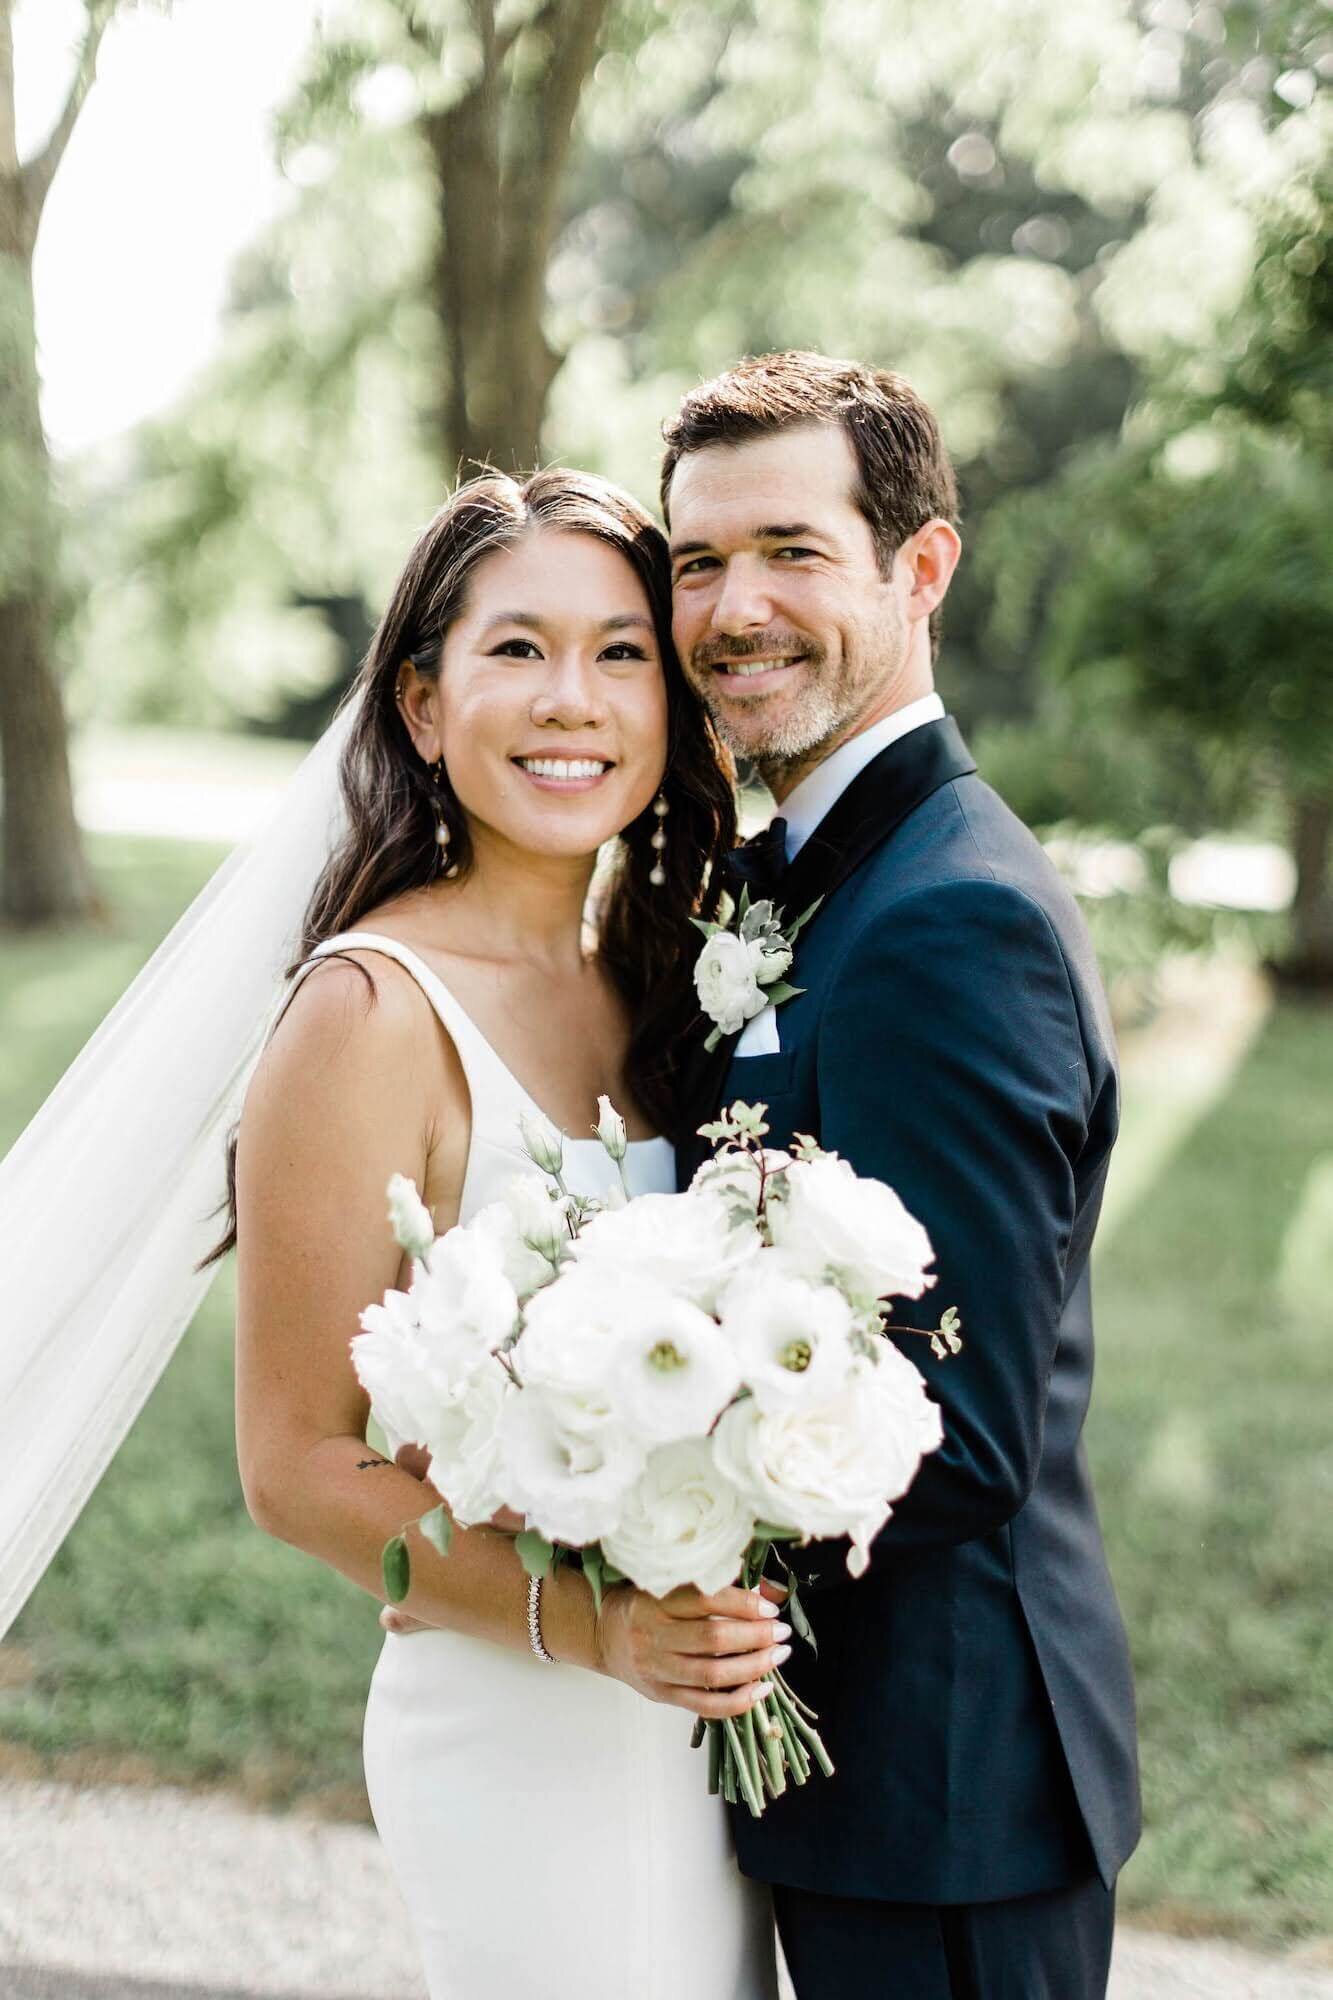 Michelle Kochvar wedding - couple smiling